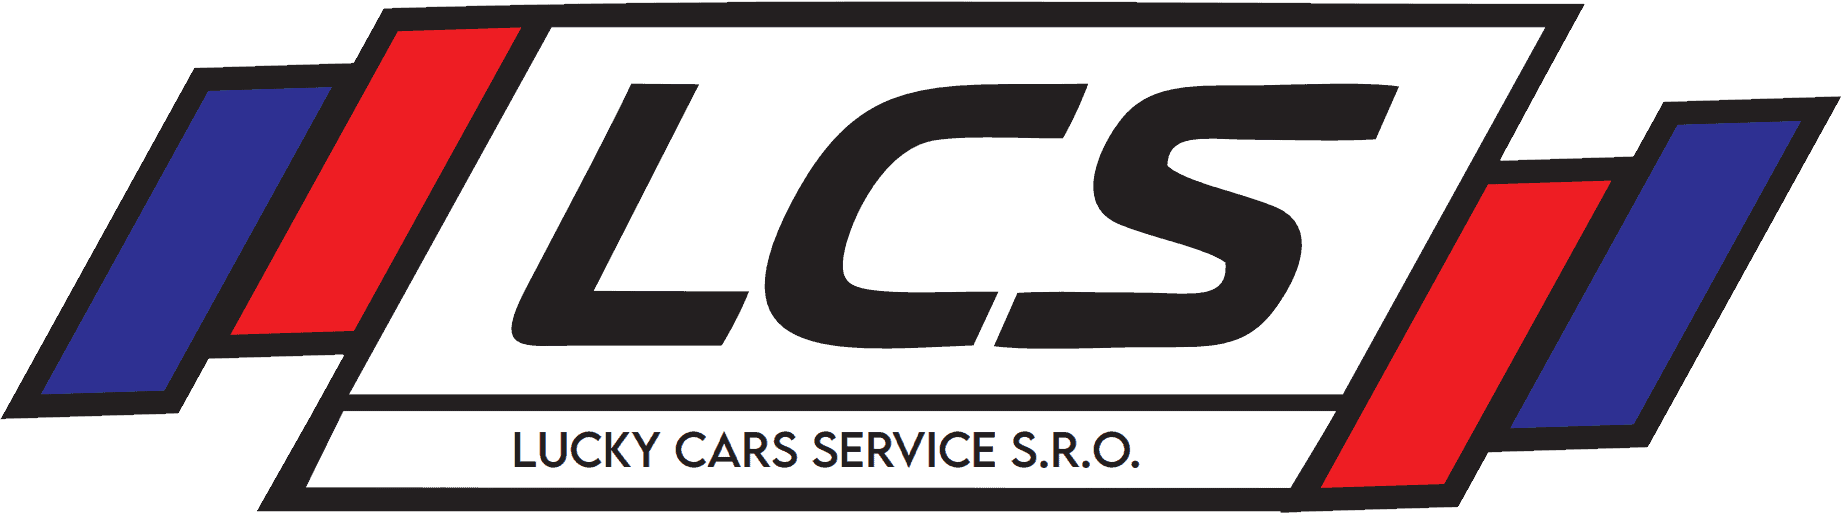 Lucky Cars Service